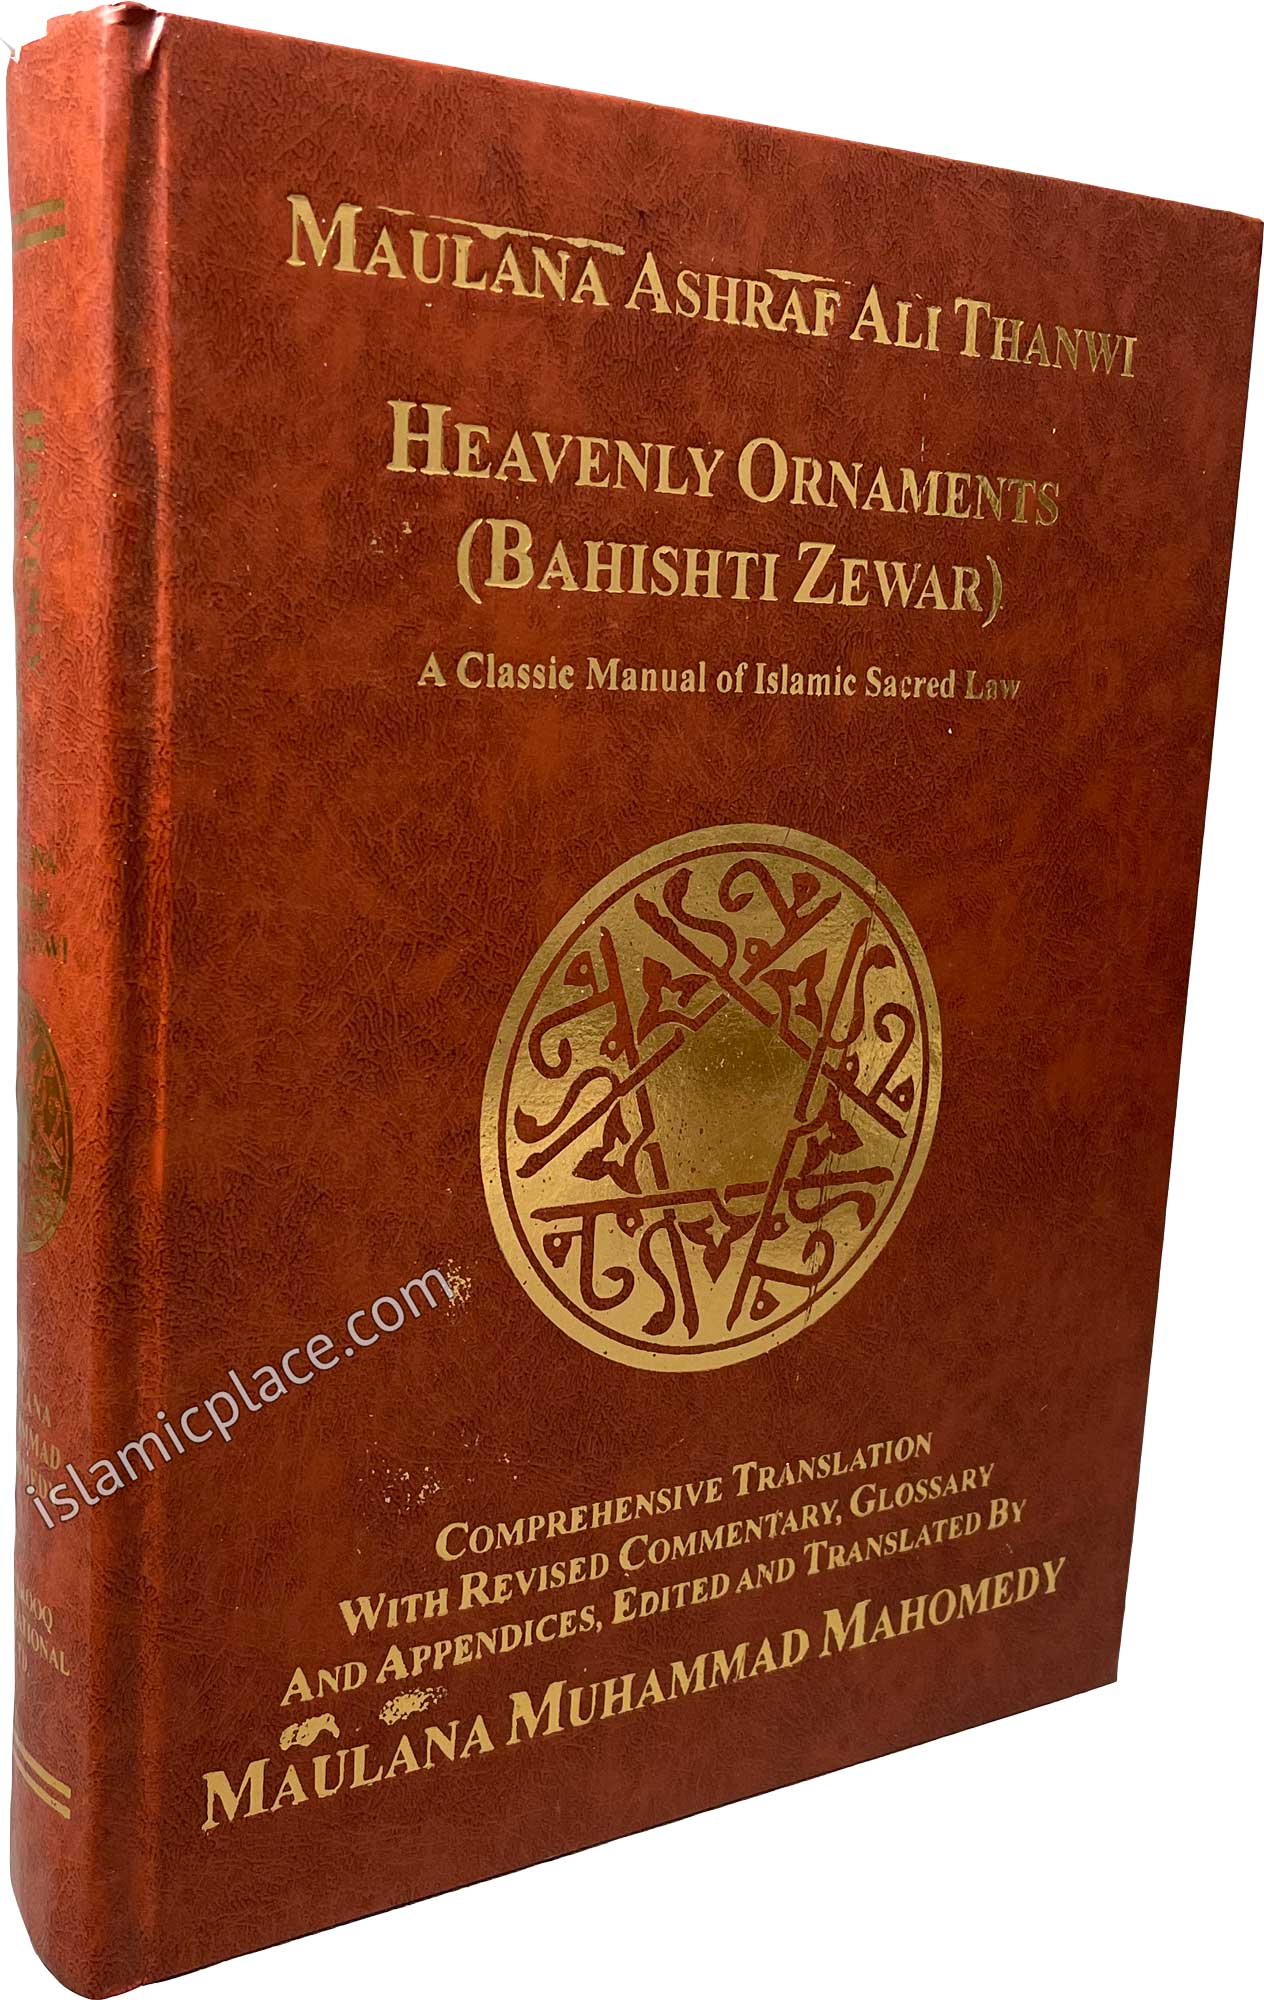 Heavenly Ornaments: (Bahishti Zewar) HB large size